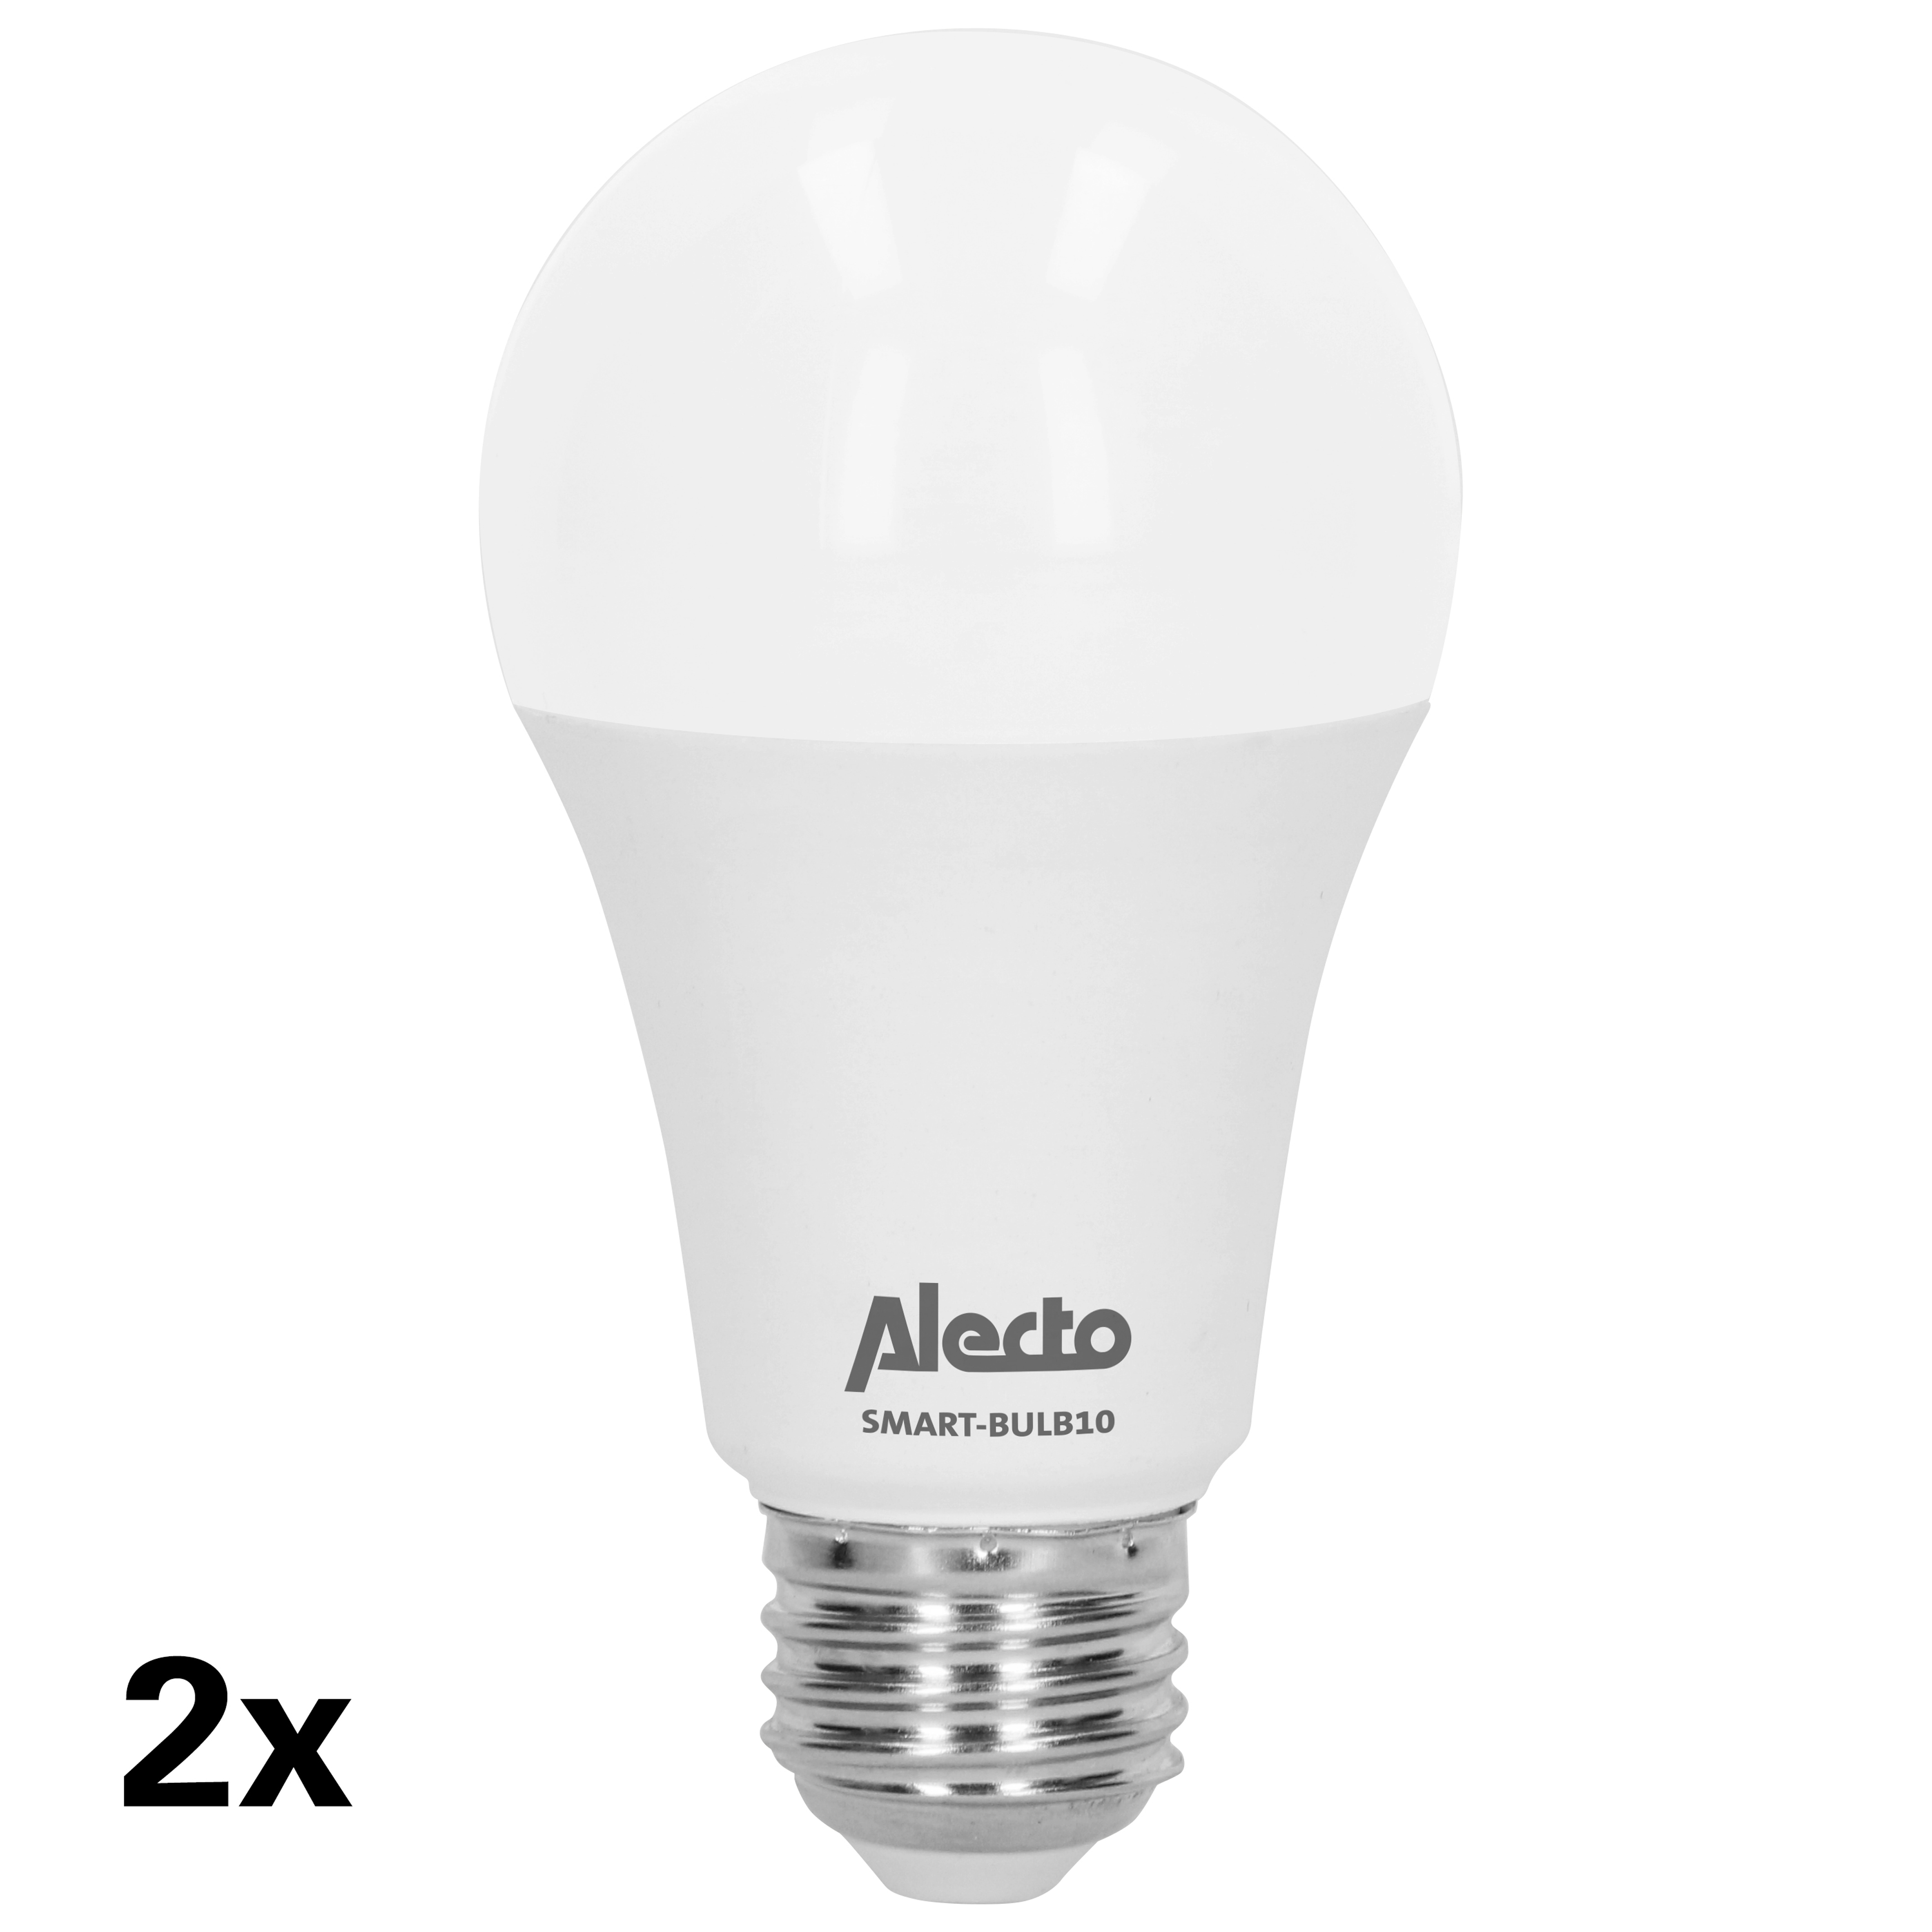 ALECTO SMART-BULB10 DUO - 2er WLAN-LED-Glühlampen warmes smarte,mehrfarbige Weiß,Warmes Weiß mit E27-Sockel Kaltes Weiß,RGB,Sehr Pack Weiß,Neutrales